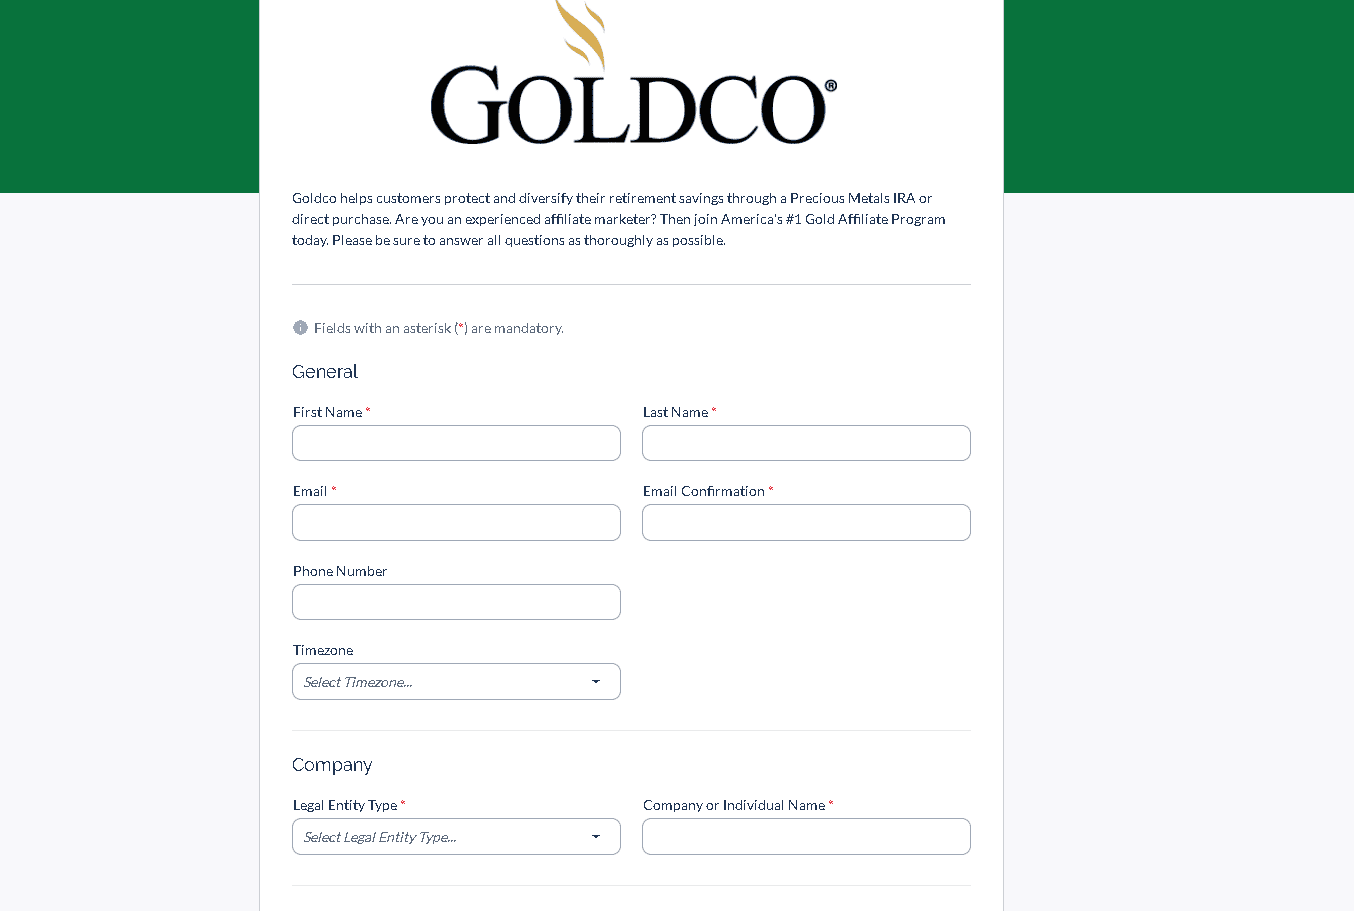 Goldco affiliate program application form